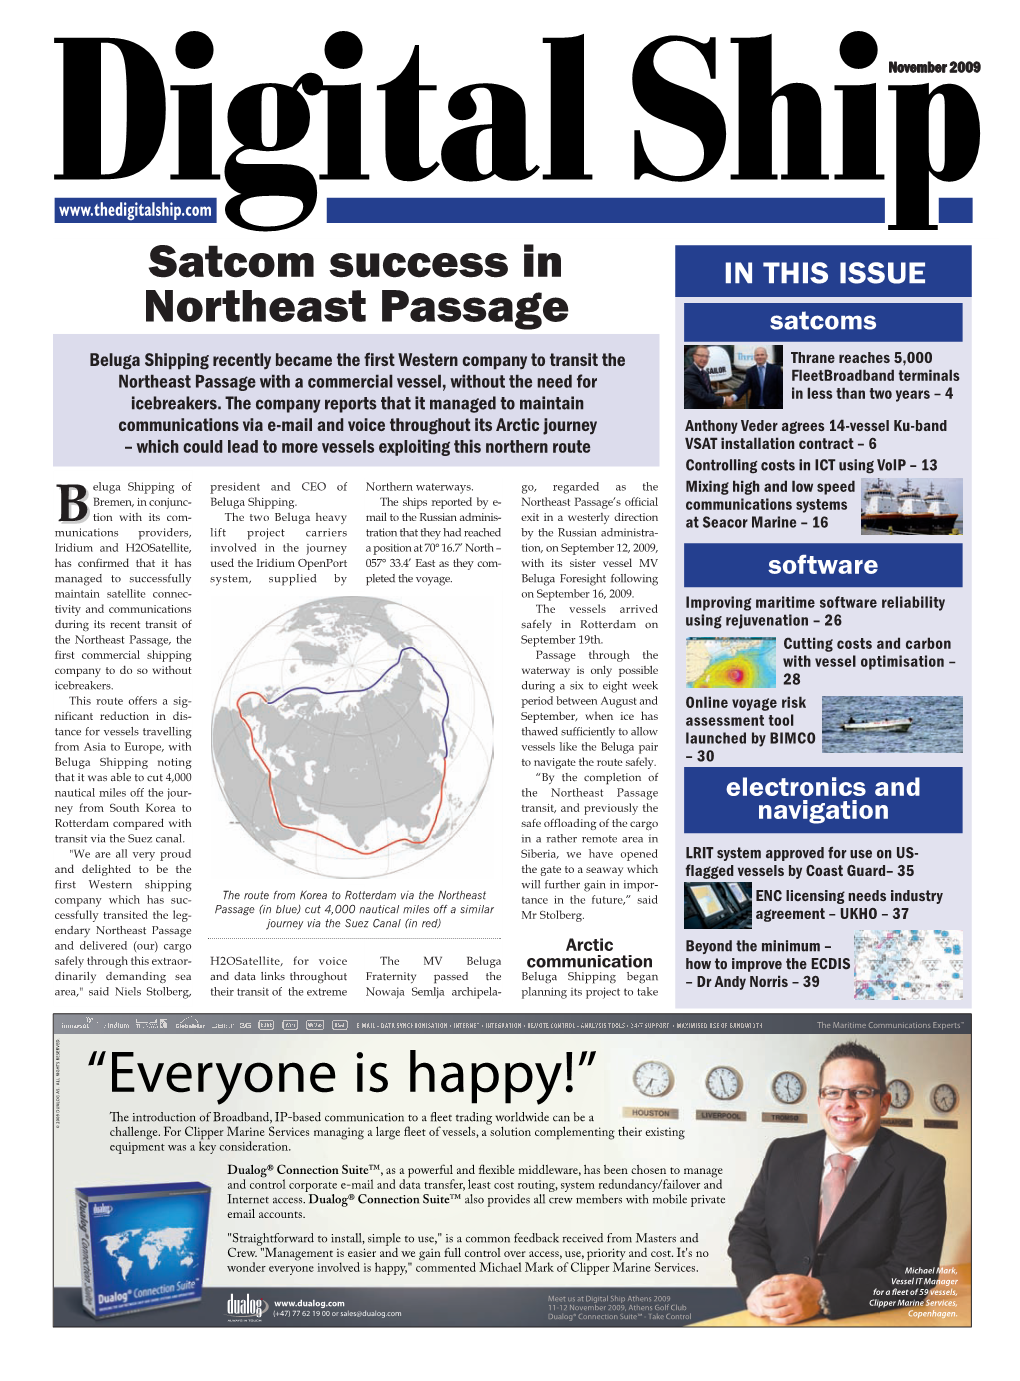 Satcom Success in Northeast Passage